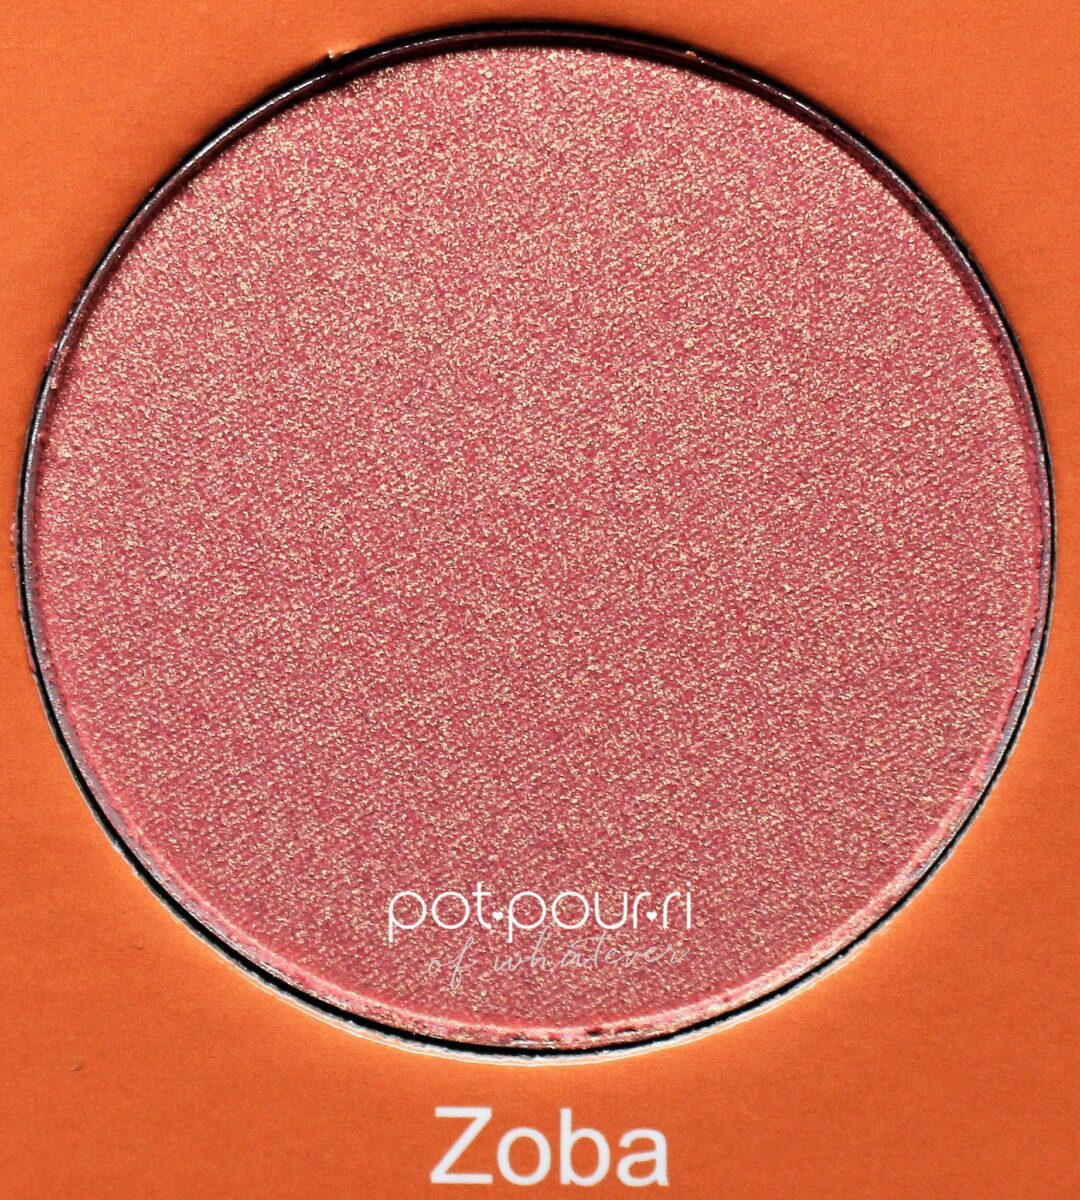 Juvia-blush-saharan-vol.11-blush-palette-Zoba-light-pink-gold-duochrome-shimmer